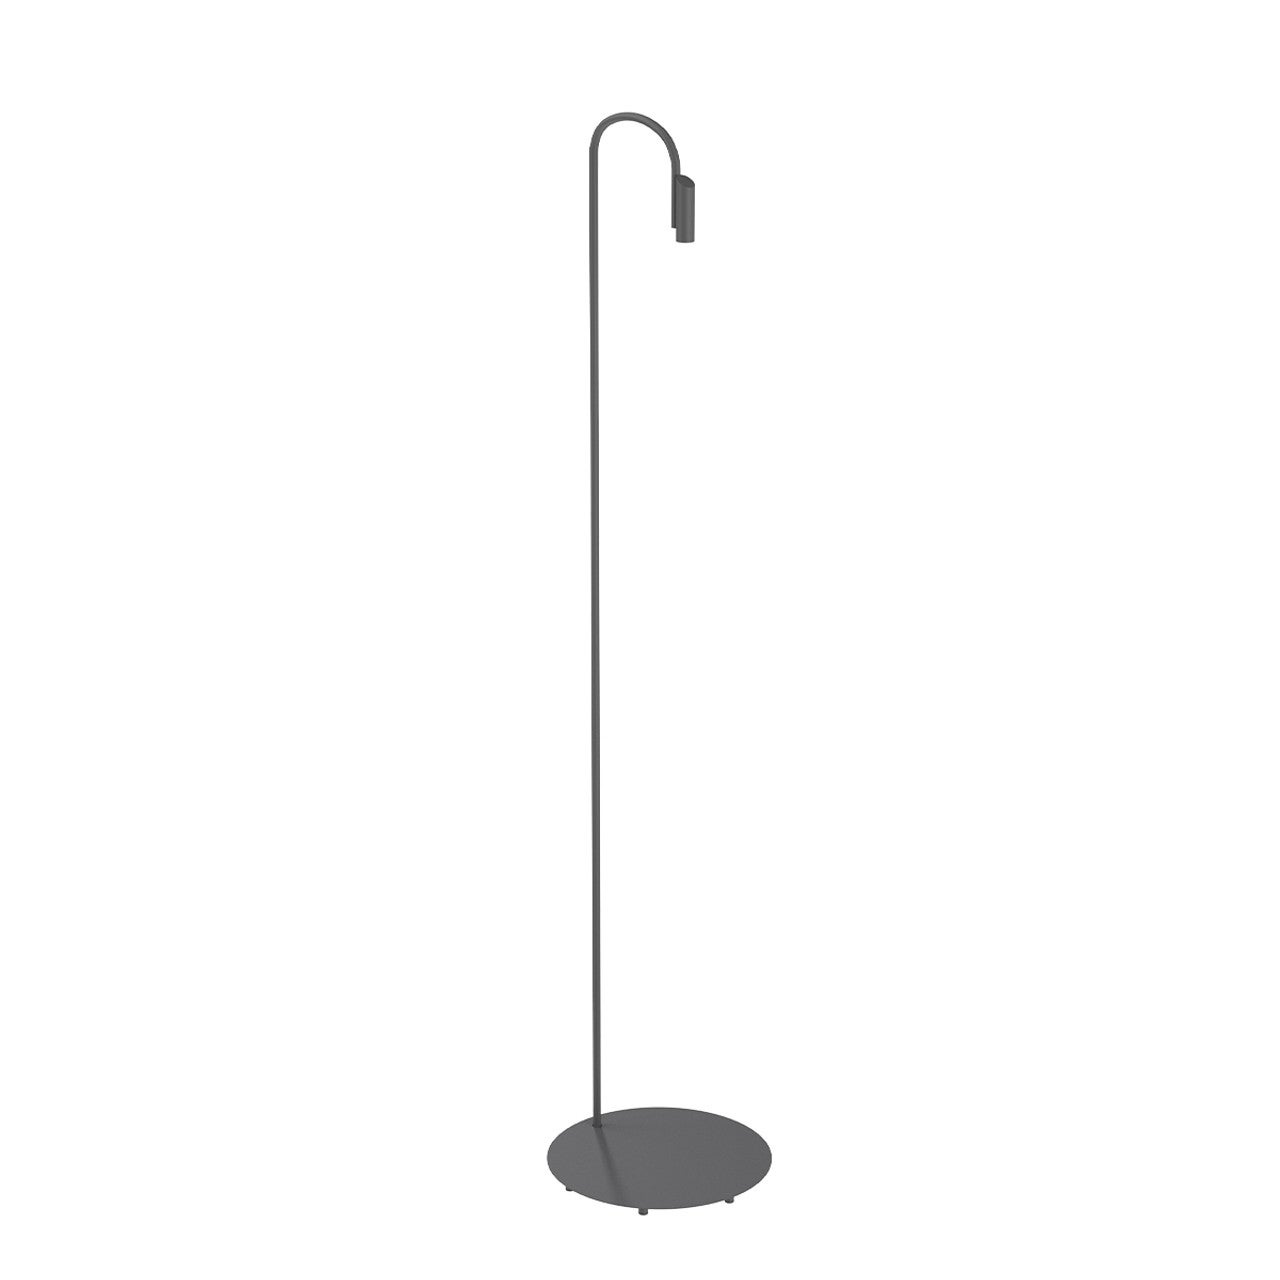 Flos Caule 3000K Model 5 Outdoor Floor Lamp in Anthracite with Regular Shade